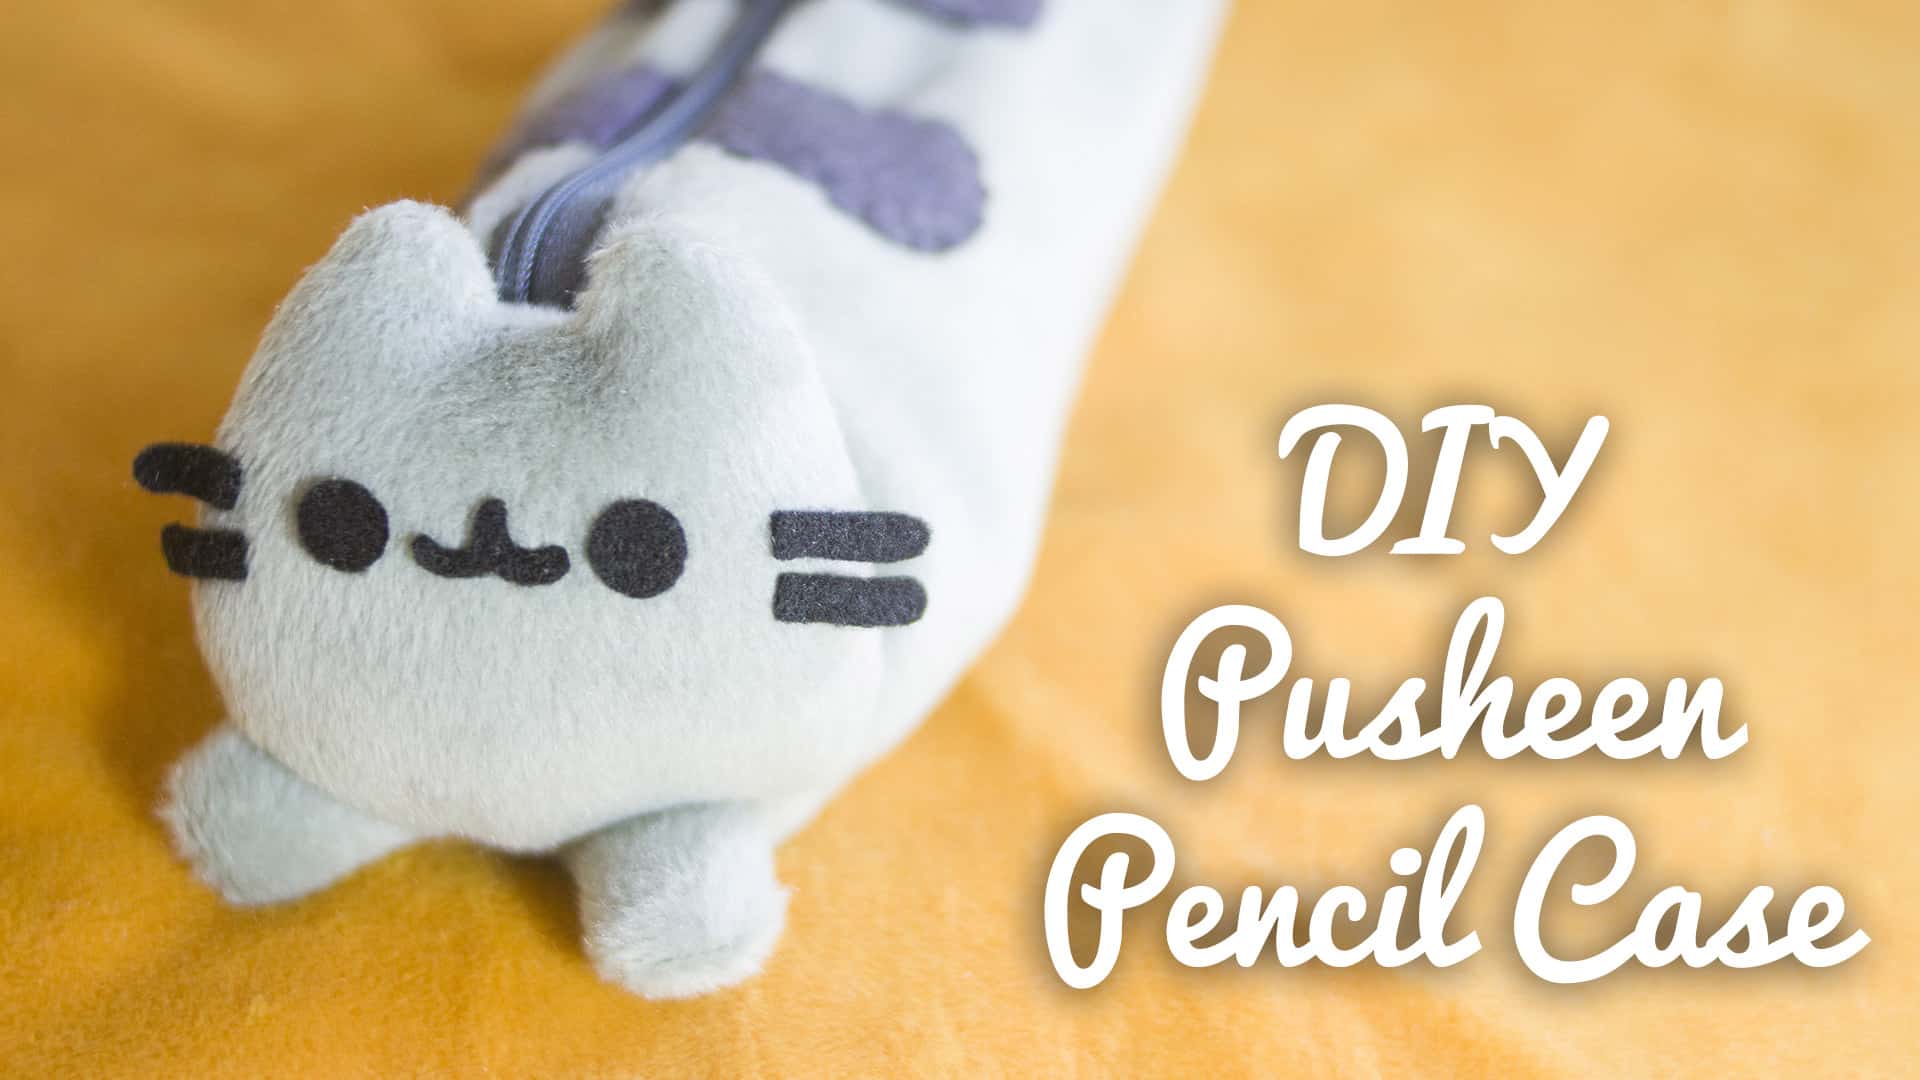 DIY Pusheen pencil case